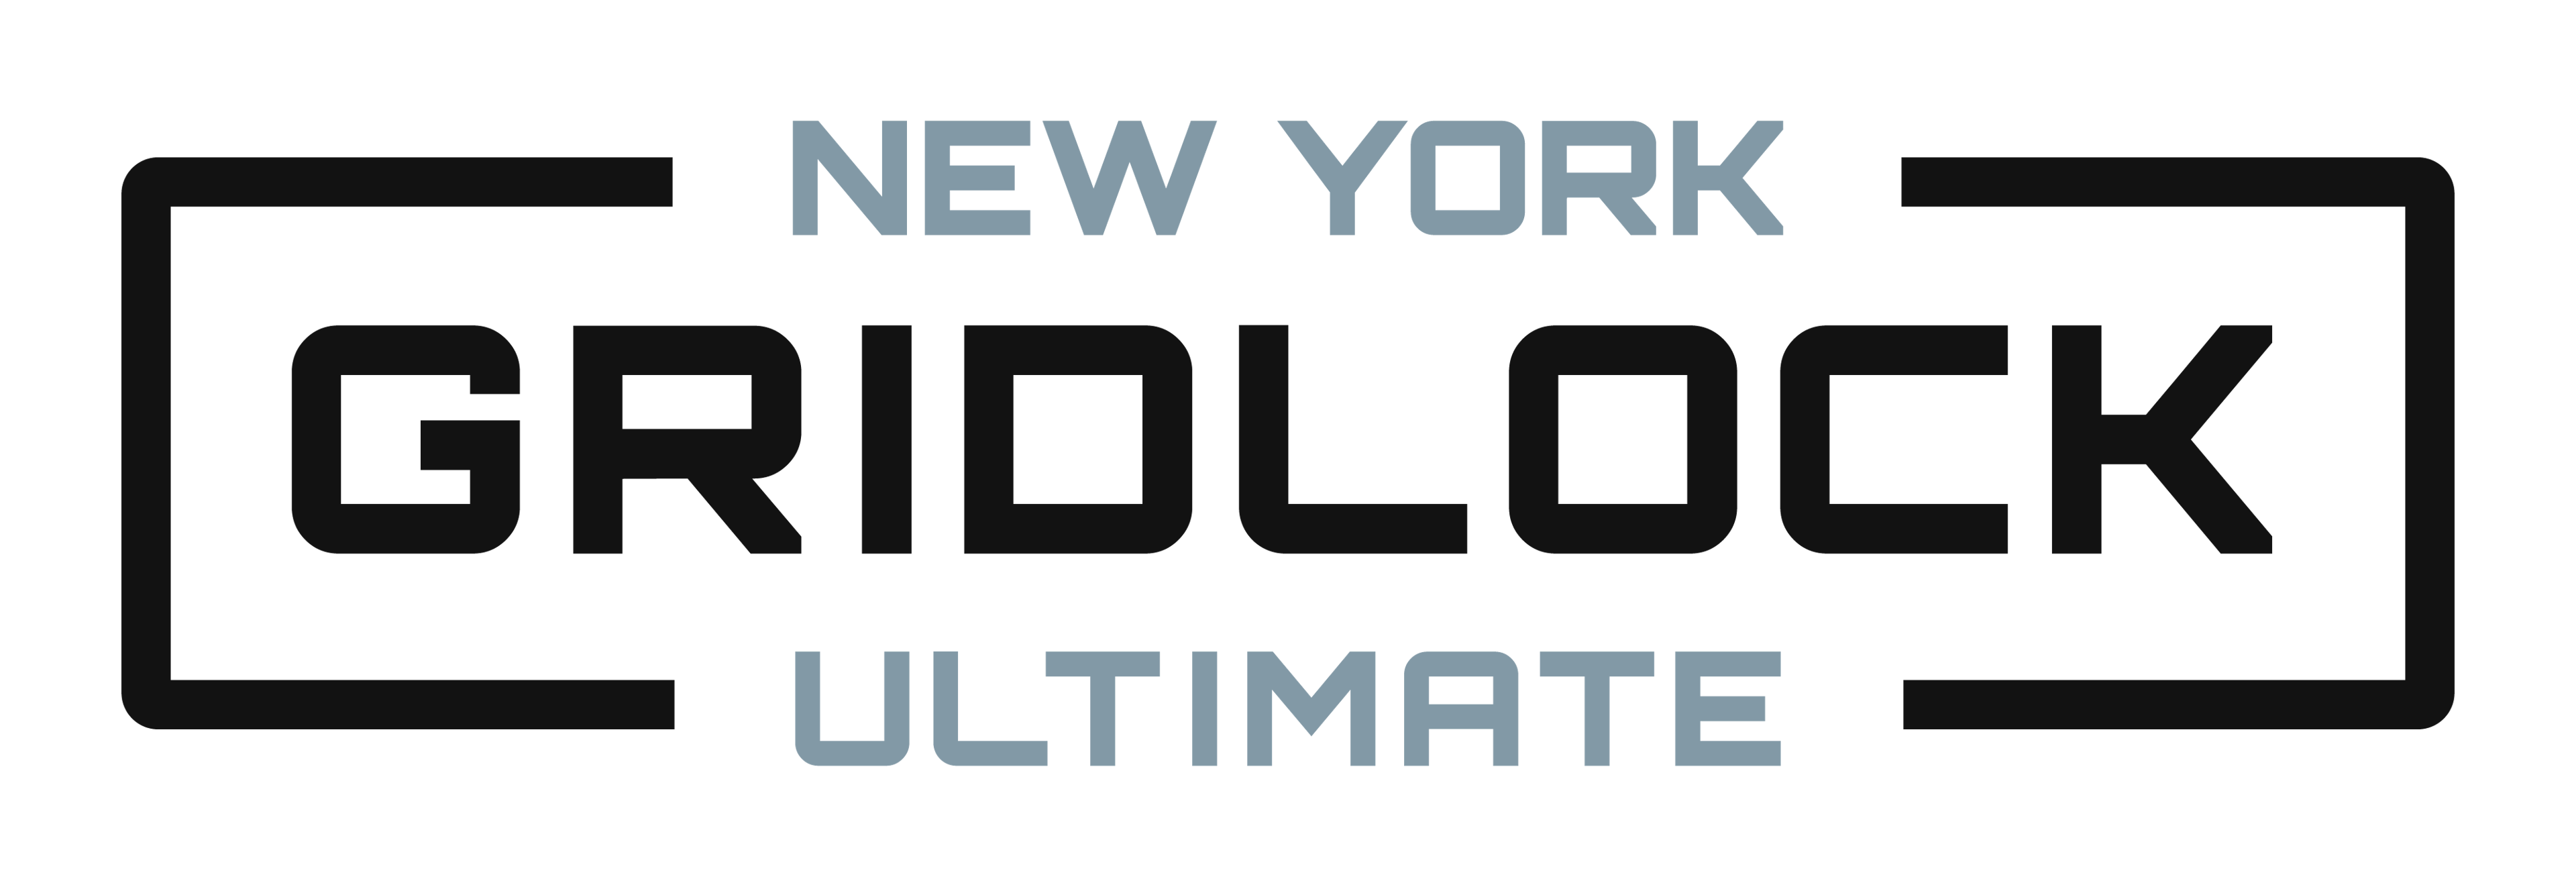 New York Gridlock Ultimate logo